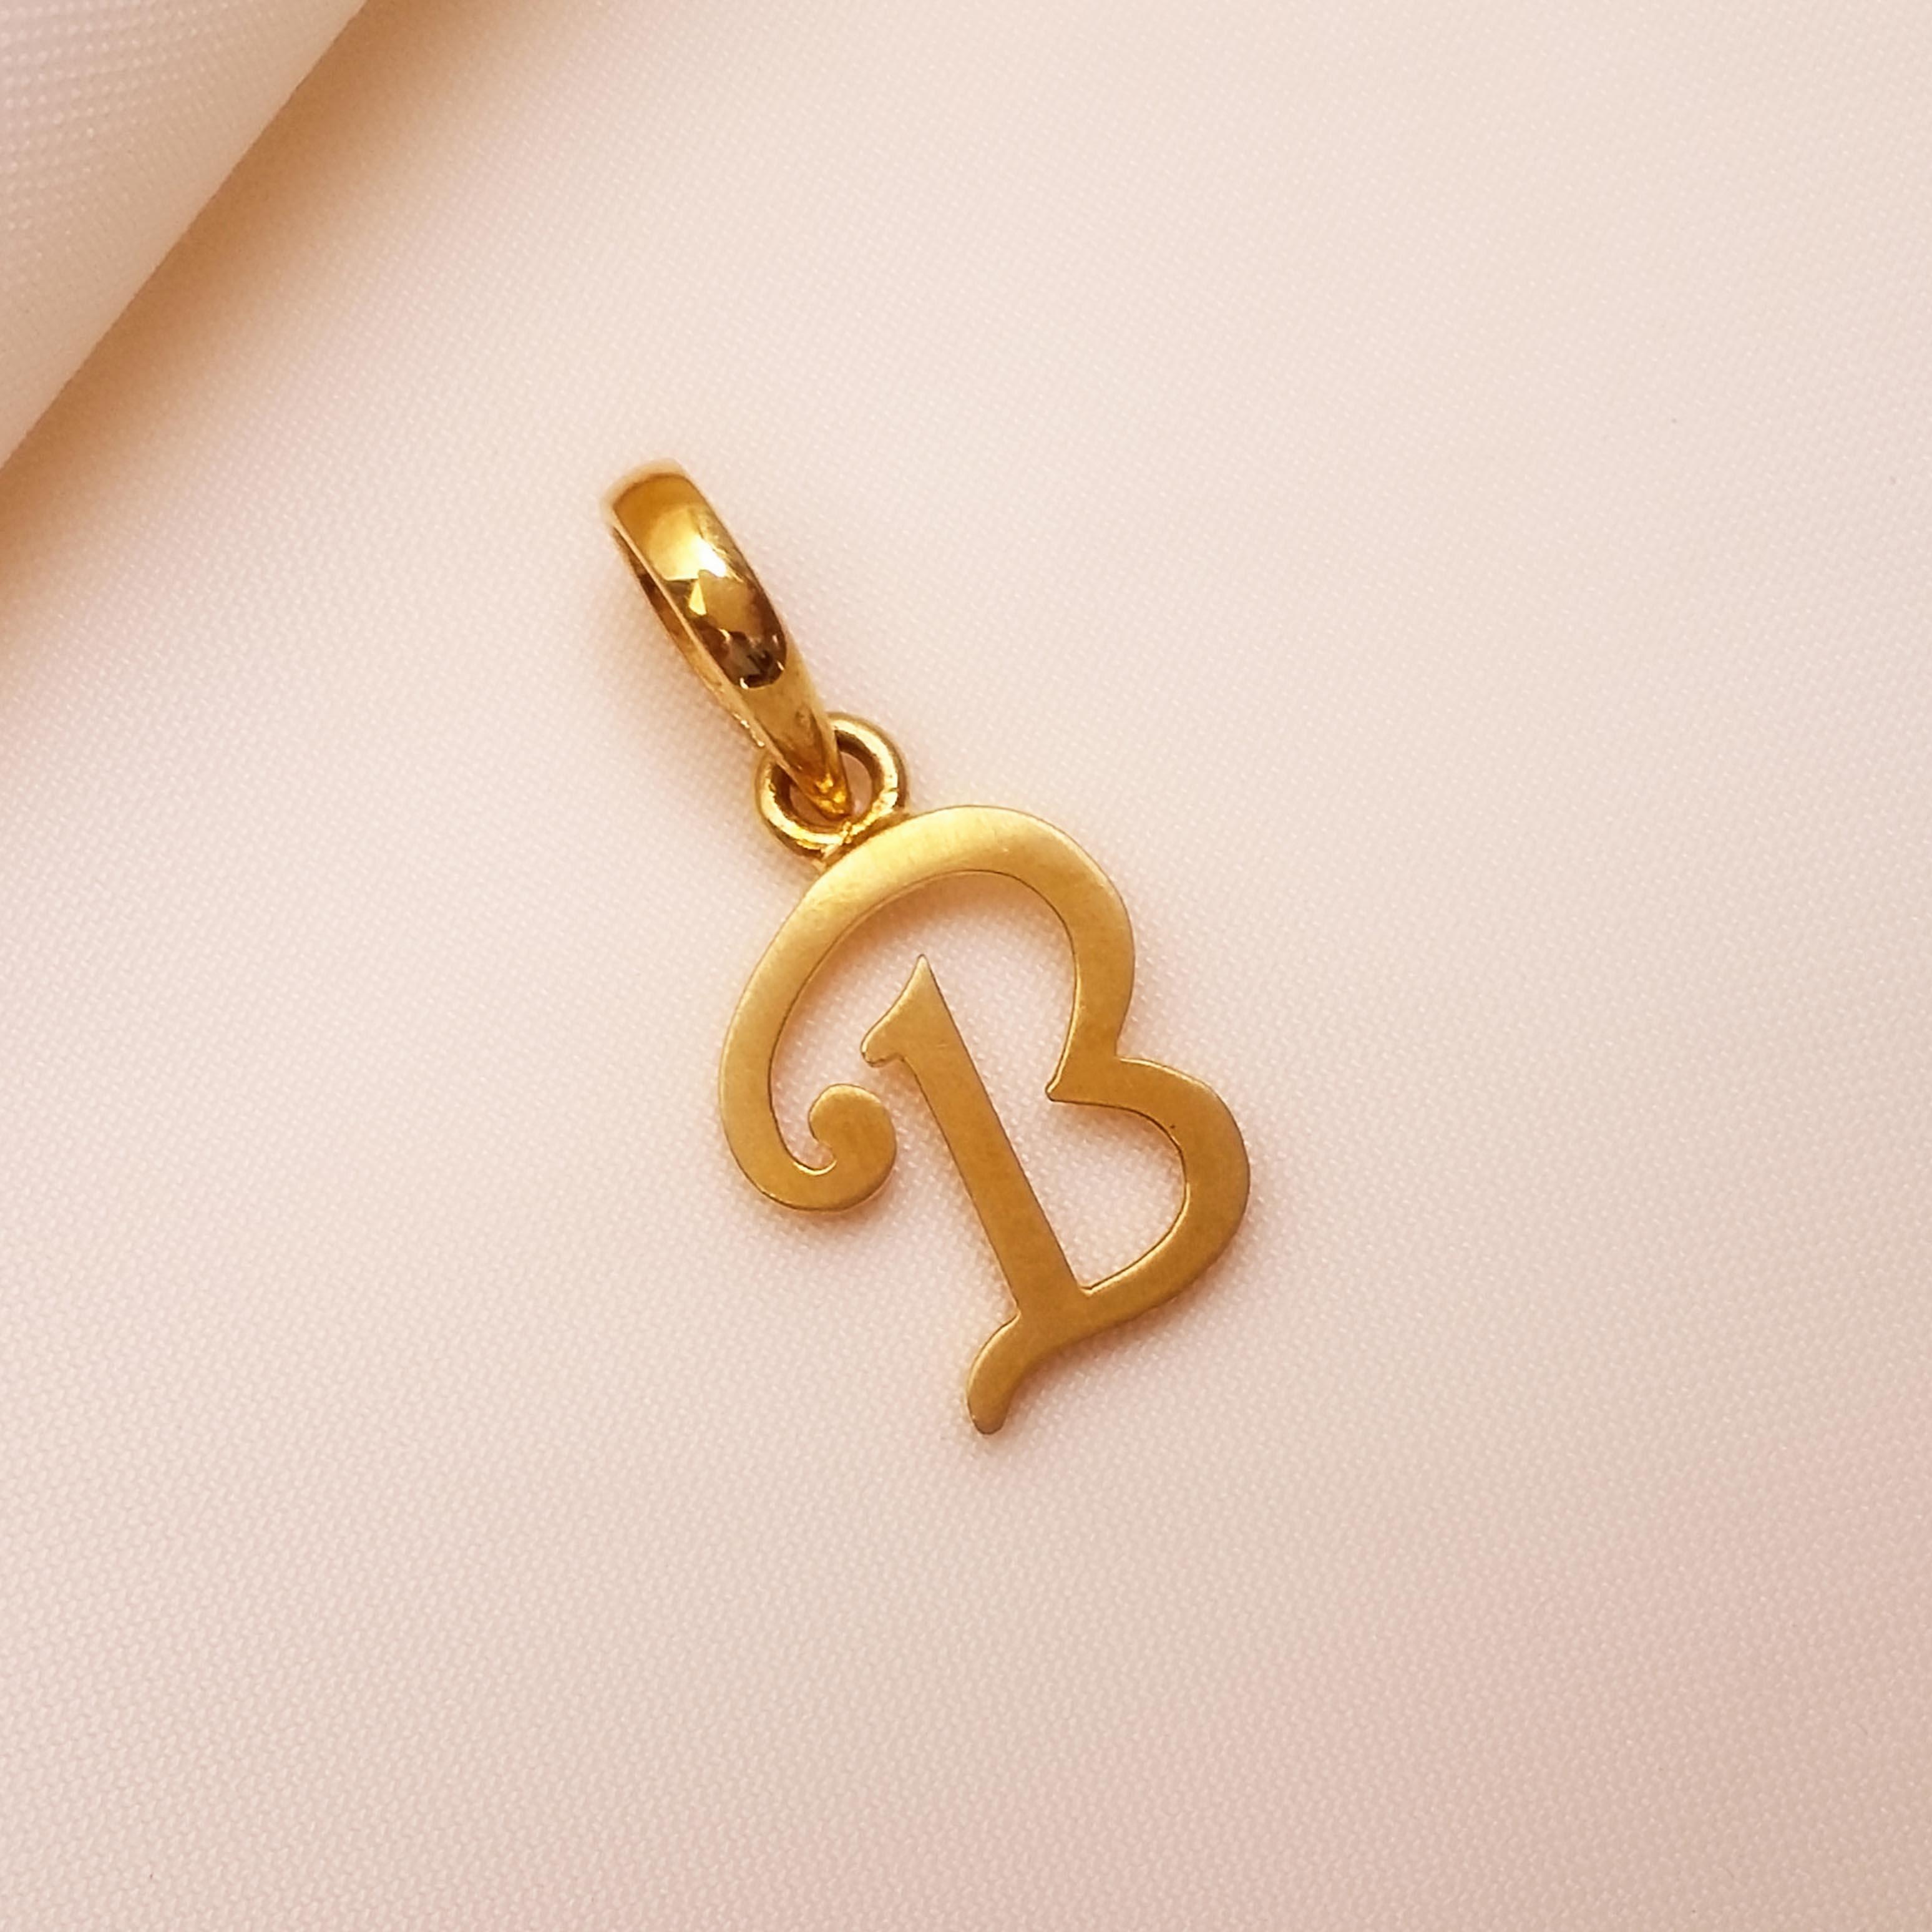 Buy B Bella Gold Letter Pendant 22 KT yellow gold (1.35 gm). | Online By Giriraj Jewellers